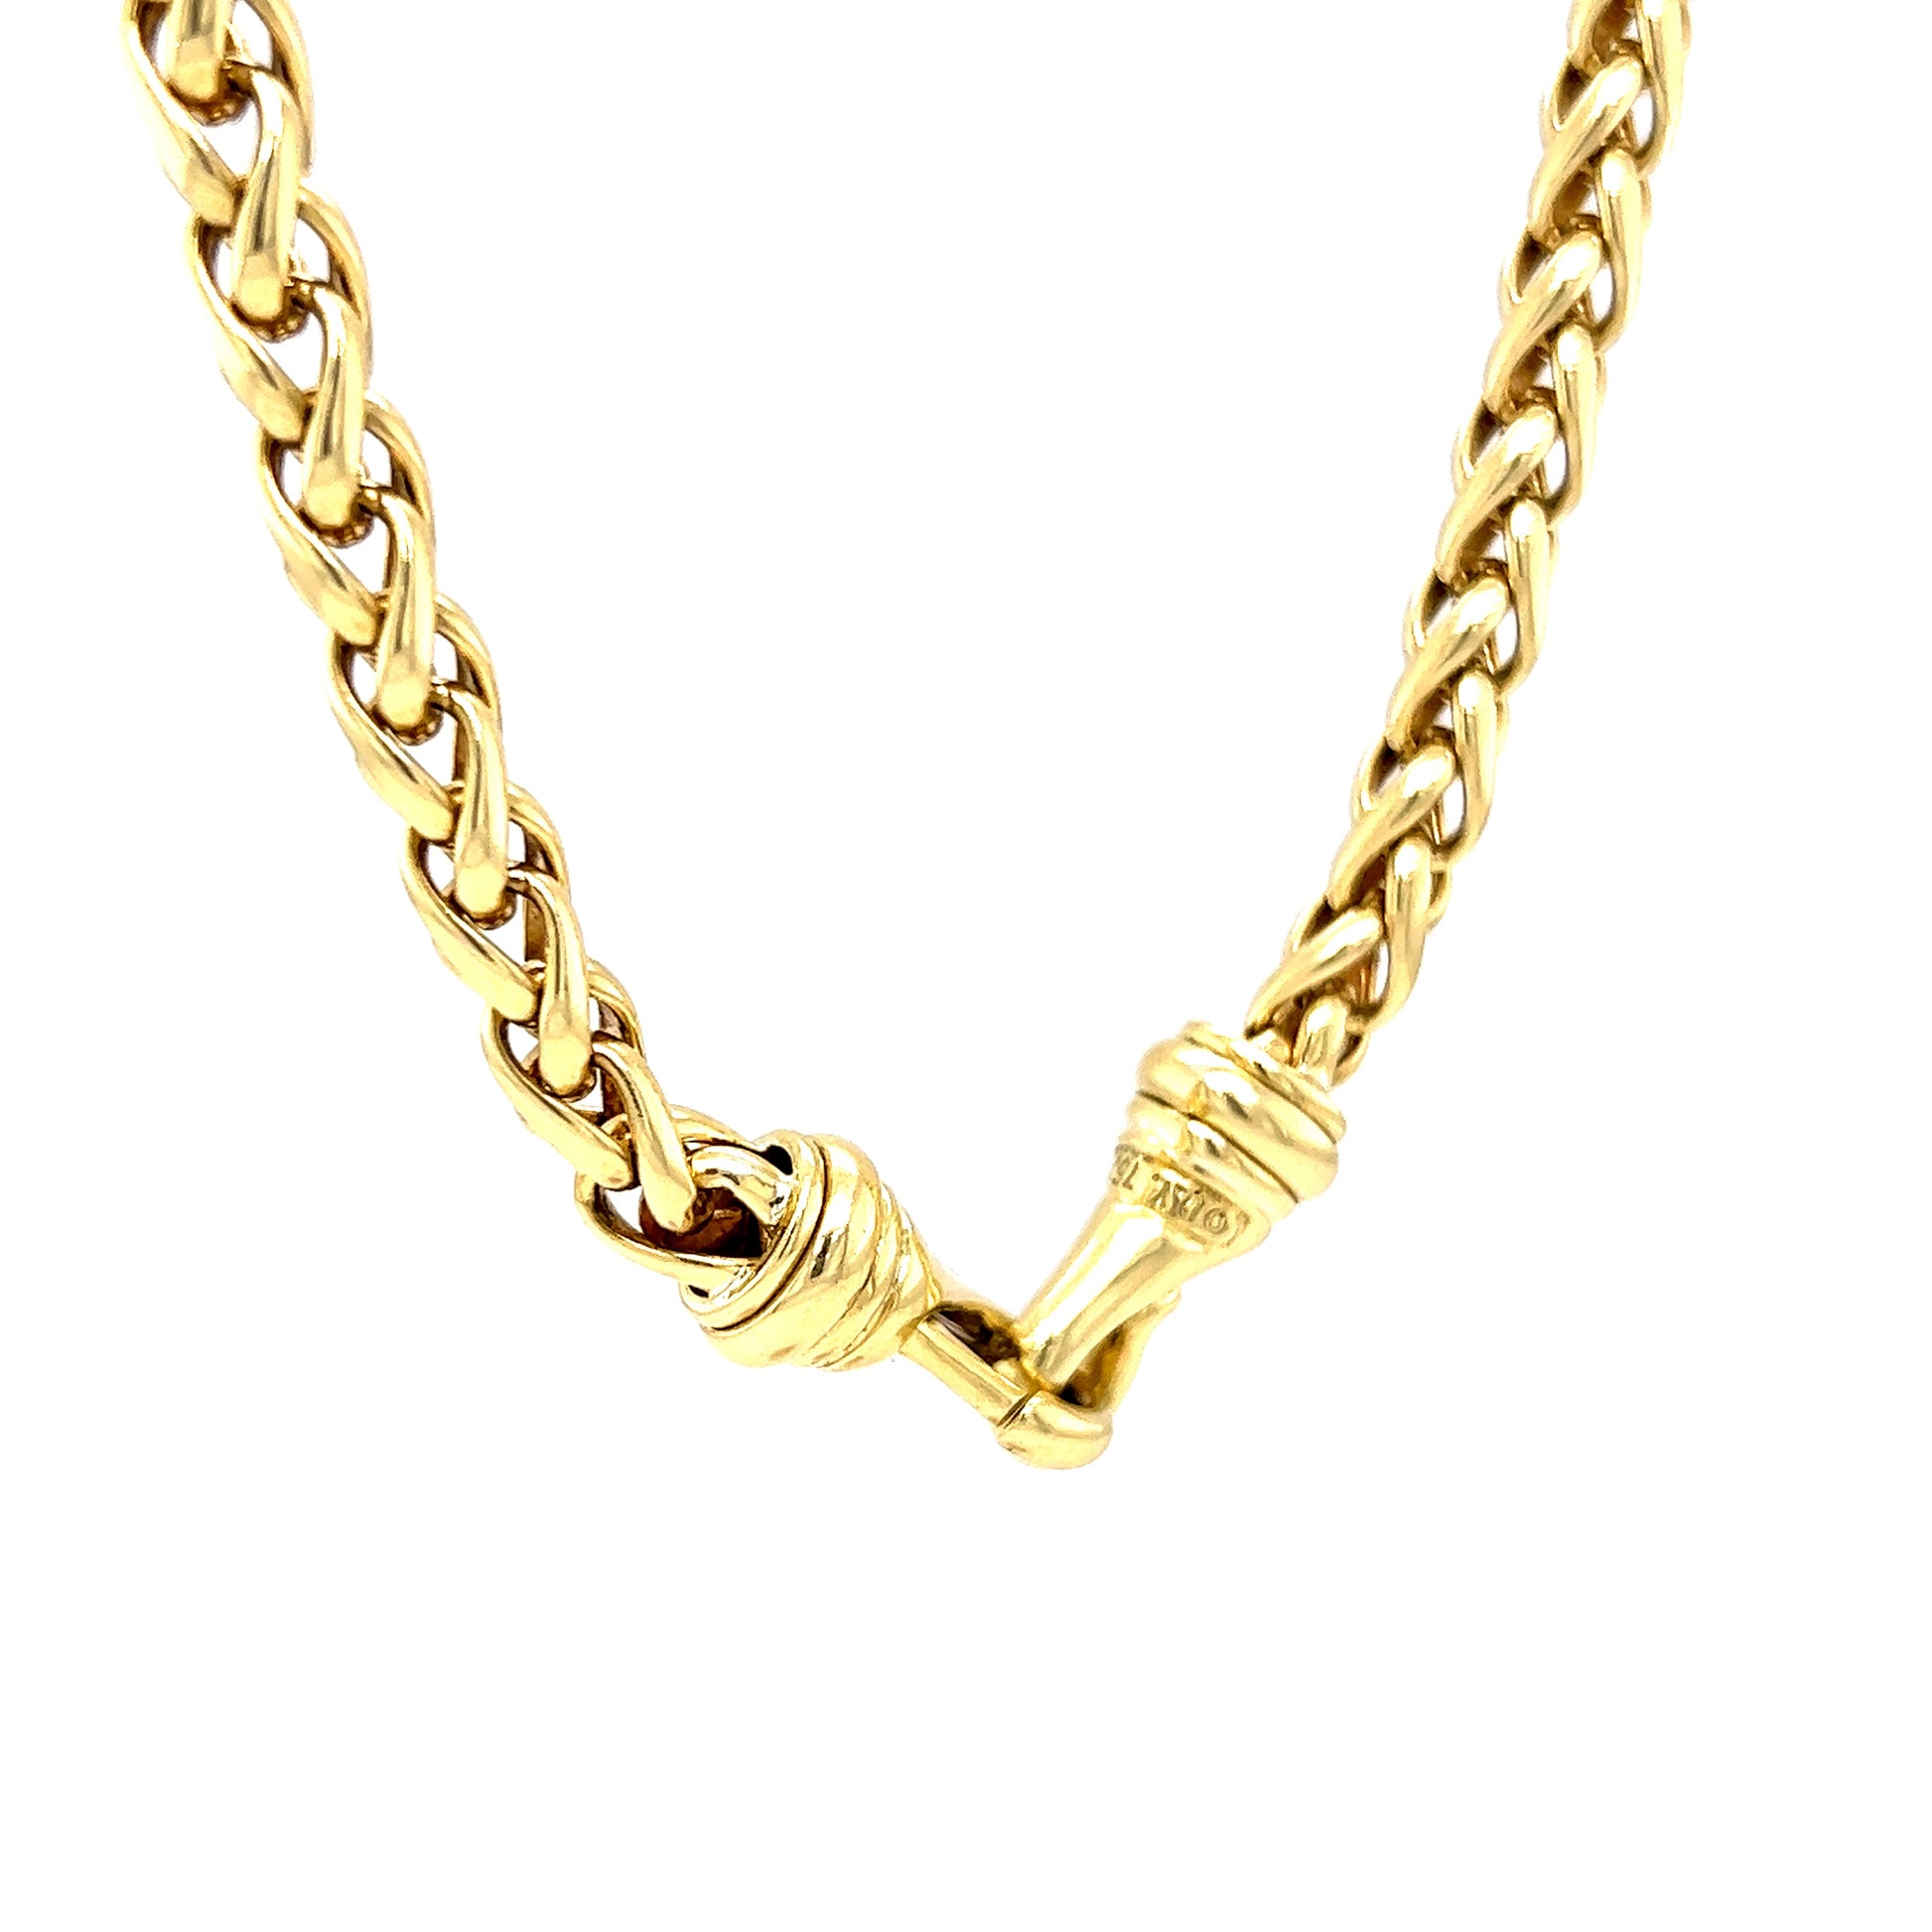 David Yurman 6mm Wheat Chain Necklace in 18k Yellow Gold